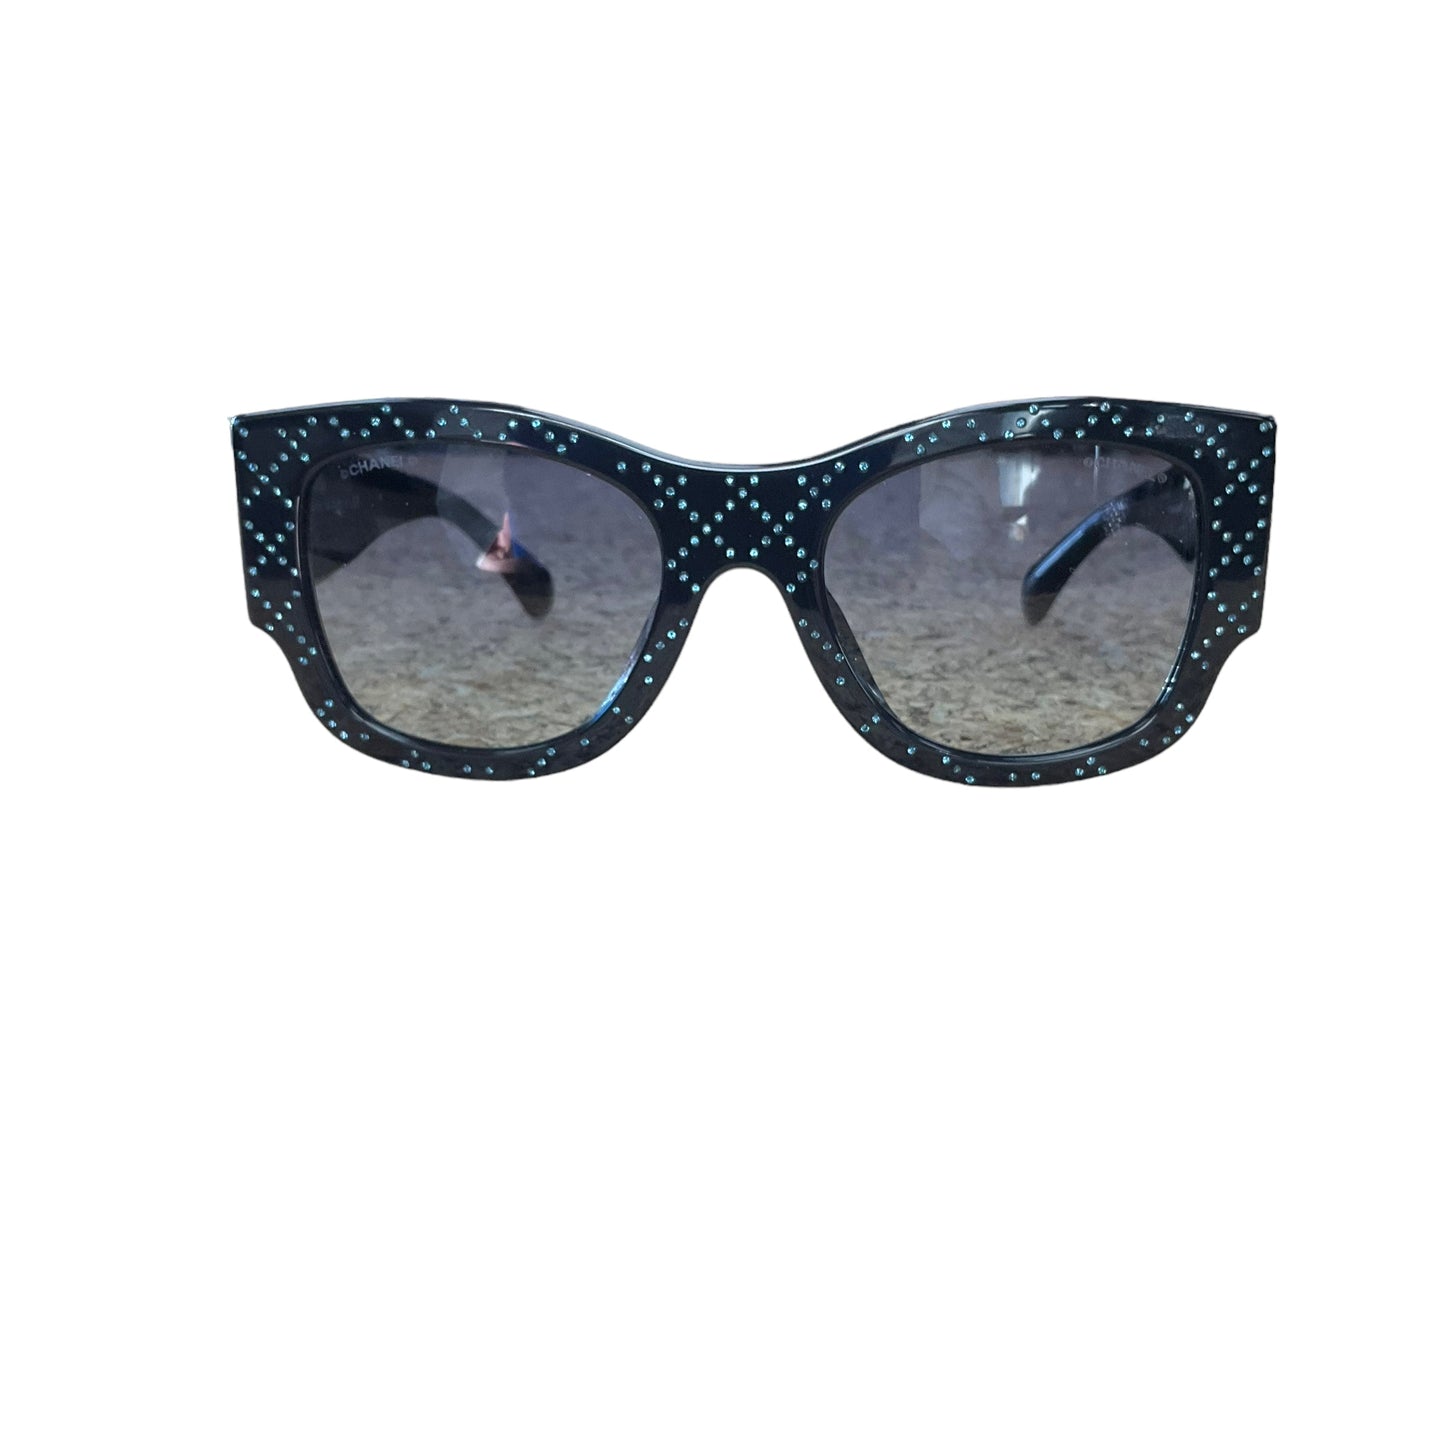 Sunglasses Luxury Designer By Chanel